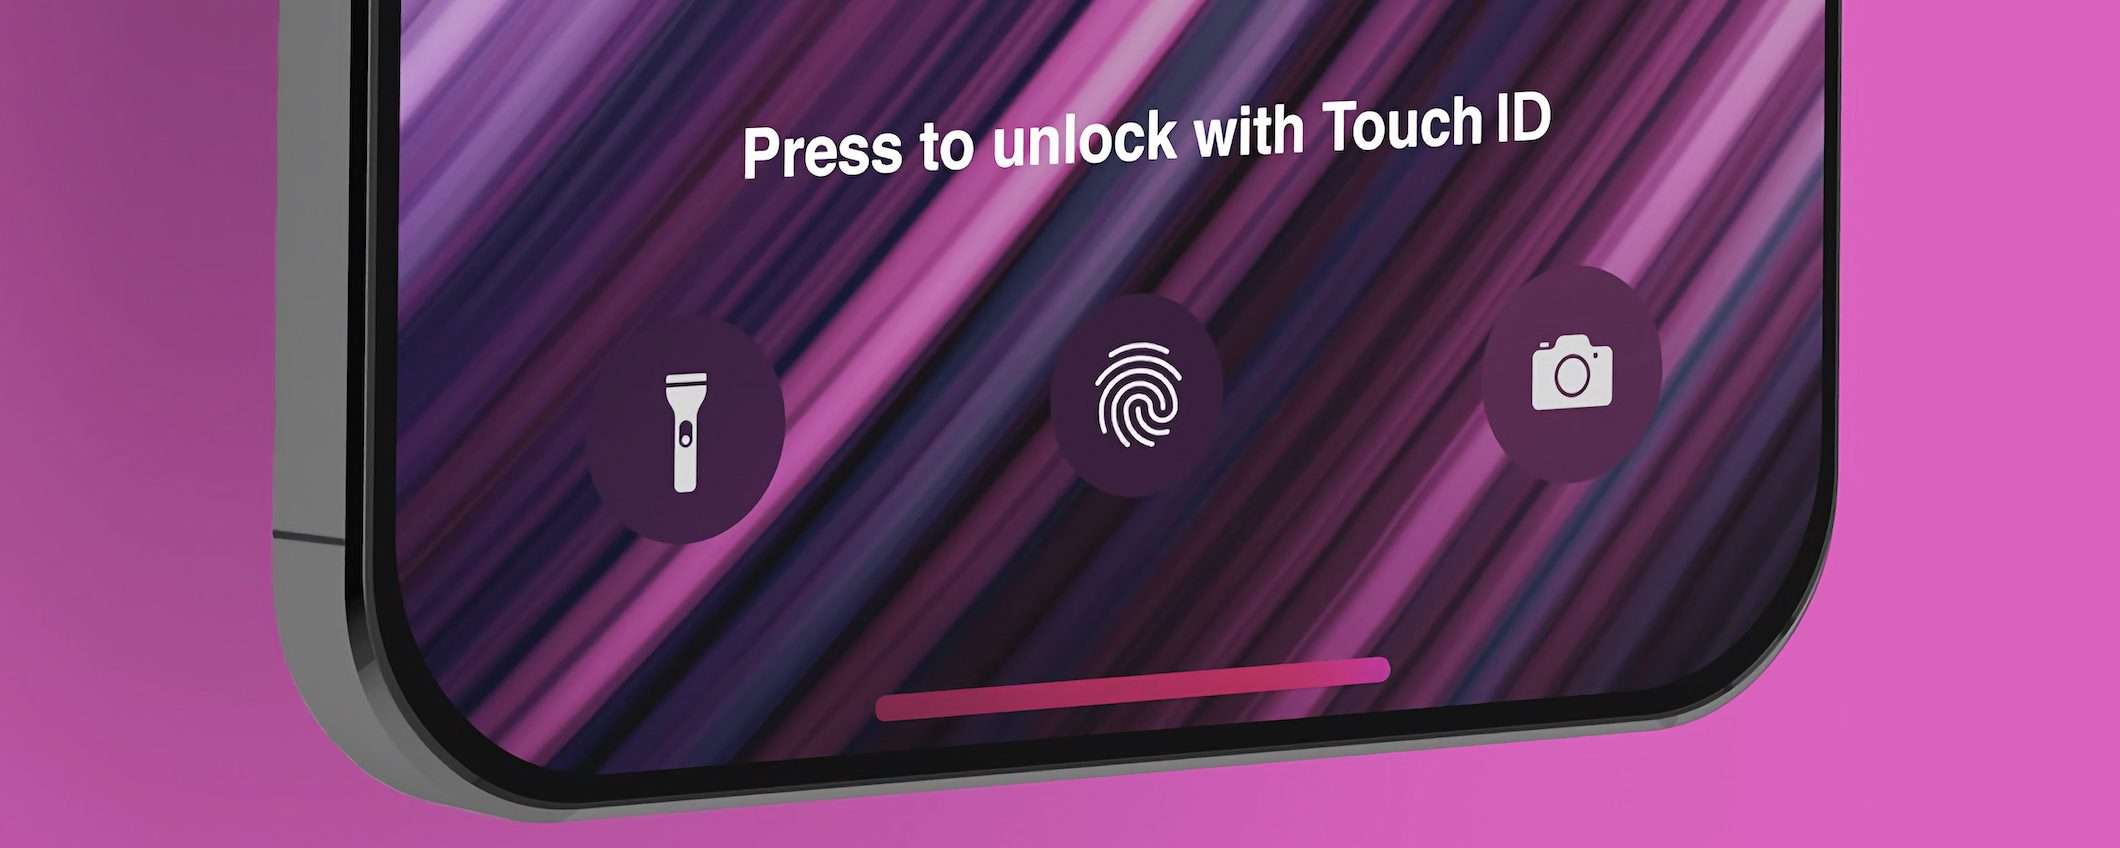 iPhone: Touch ID sotto il display, l'idea persiste